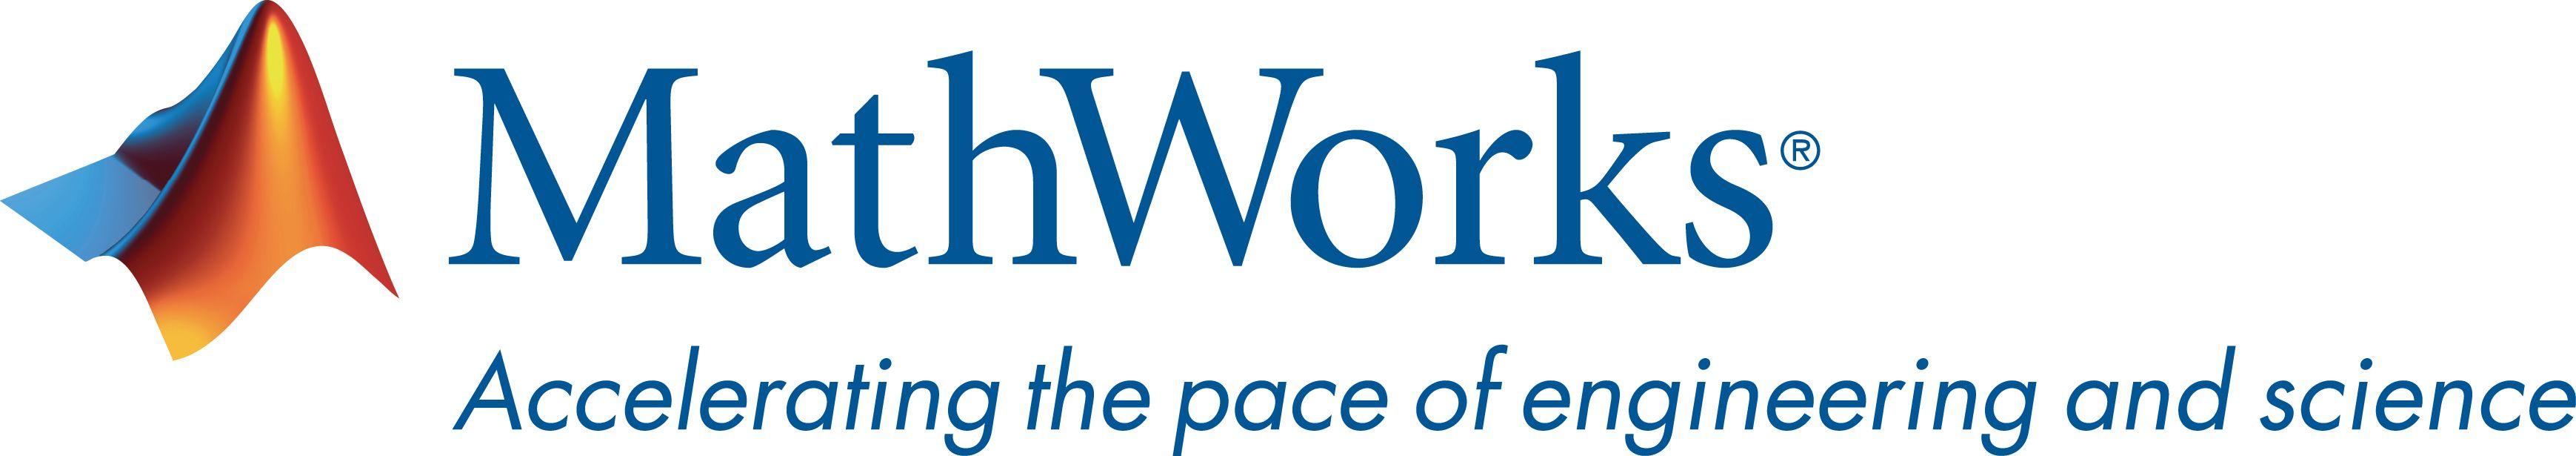 MathWorks Logo - Mathworks Logos